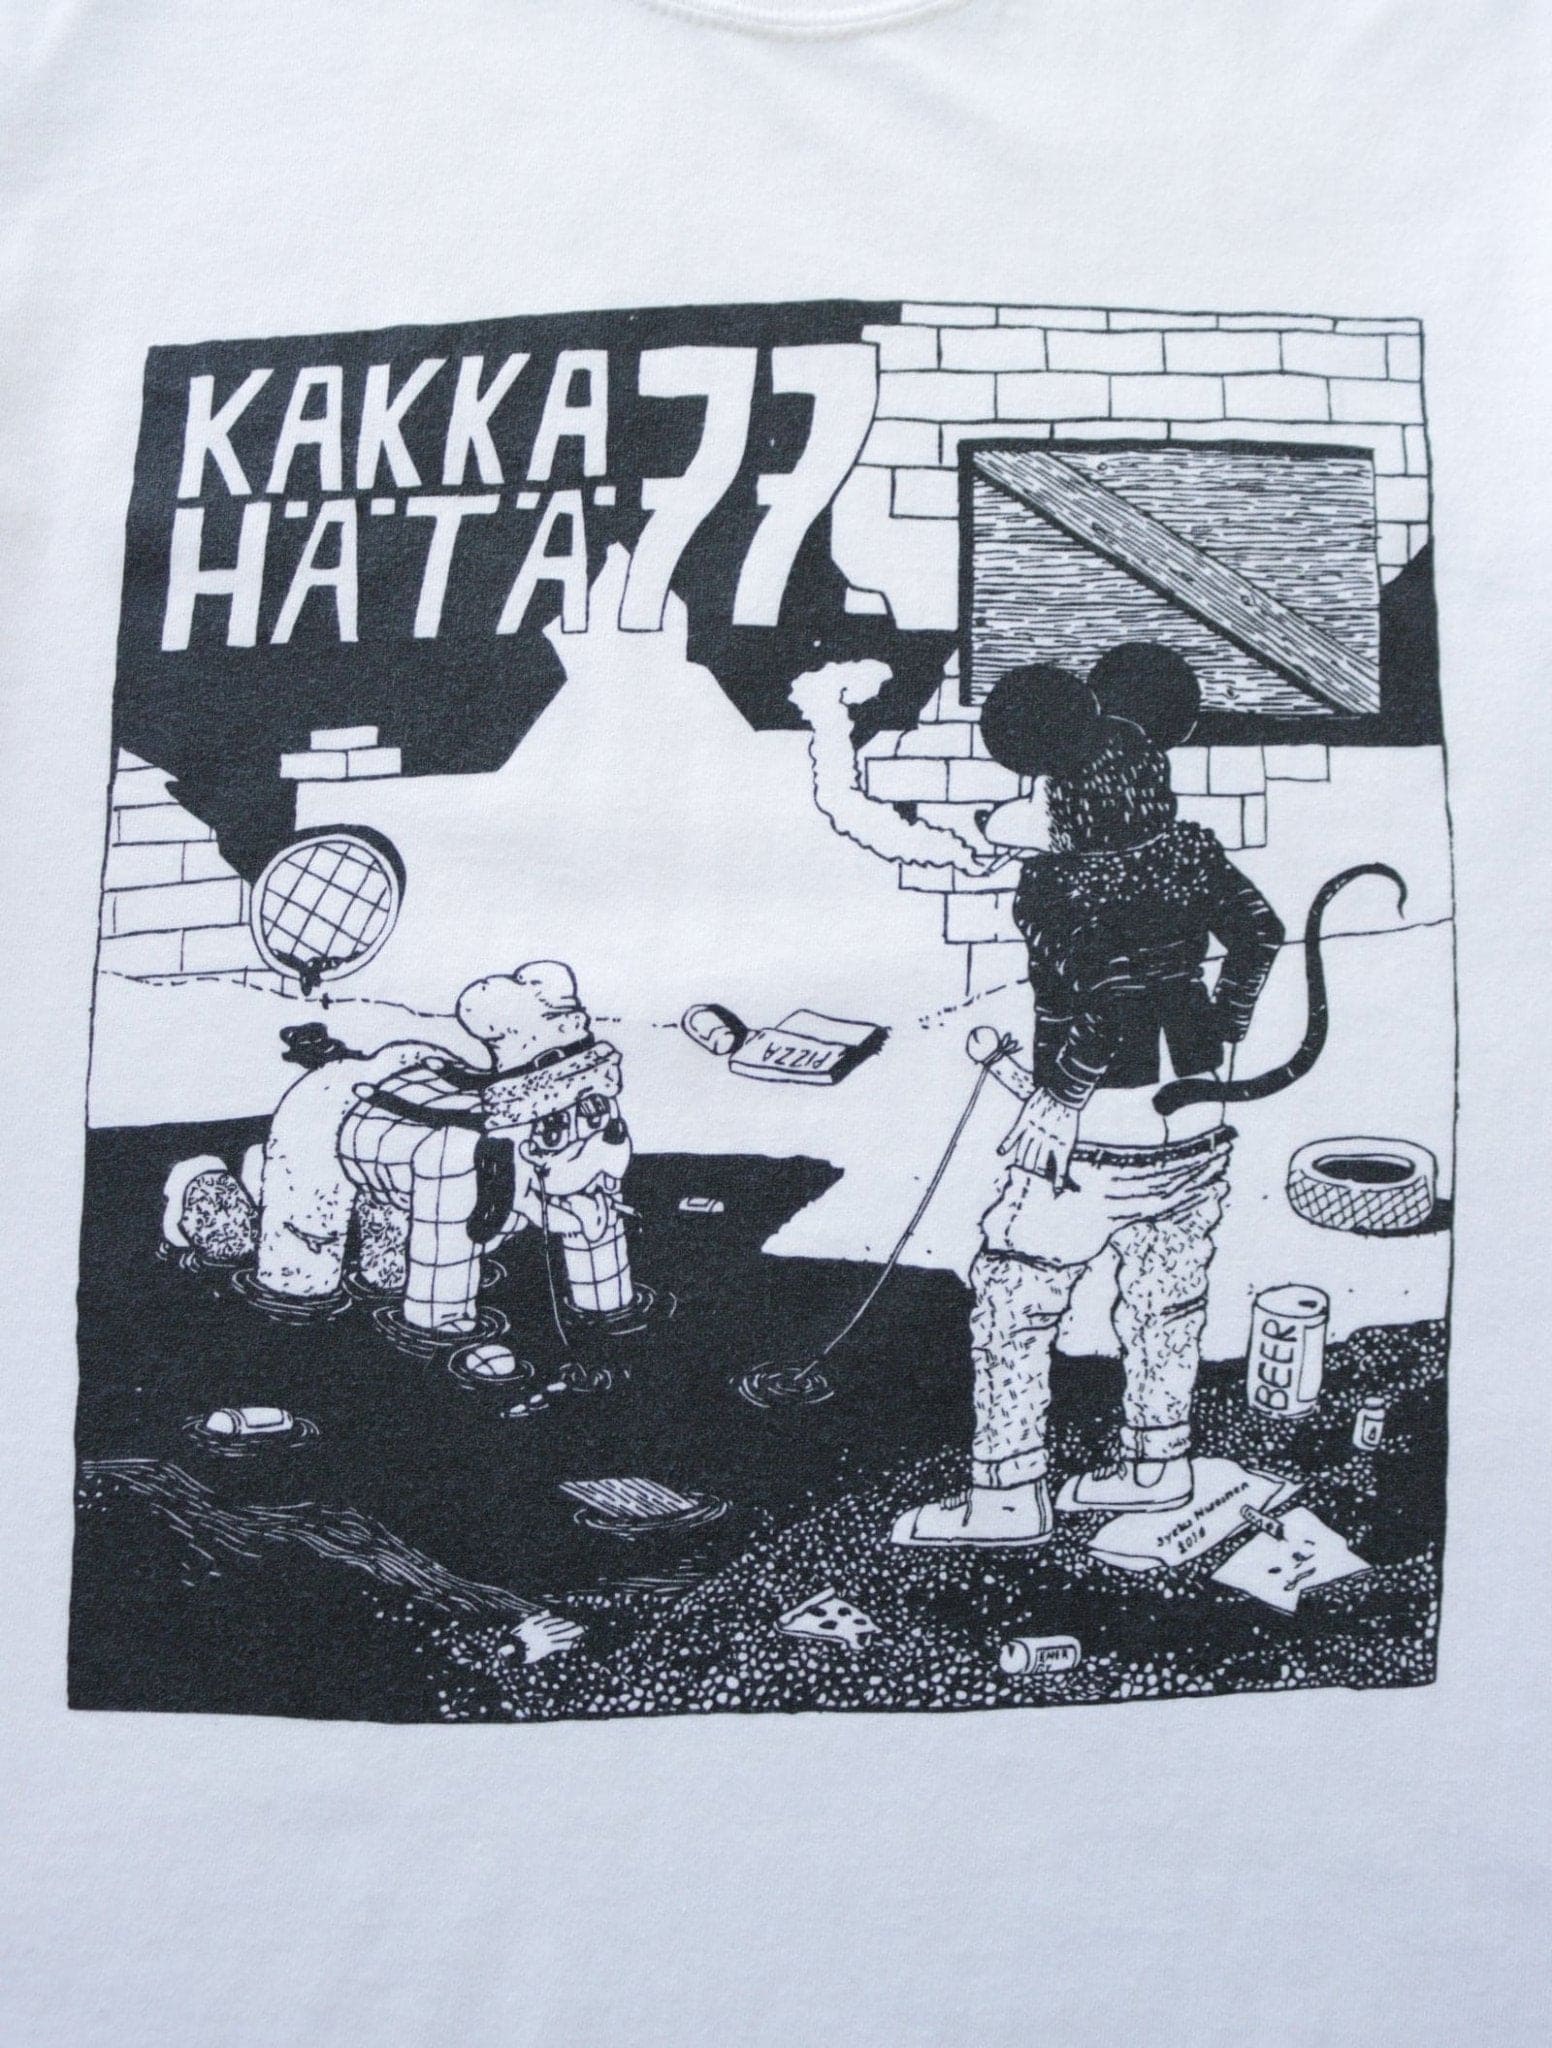 2000S KAKKA HATA 77 PUNK BAND TEE - TWO FOLD